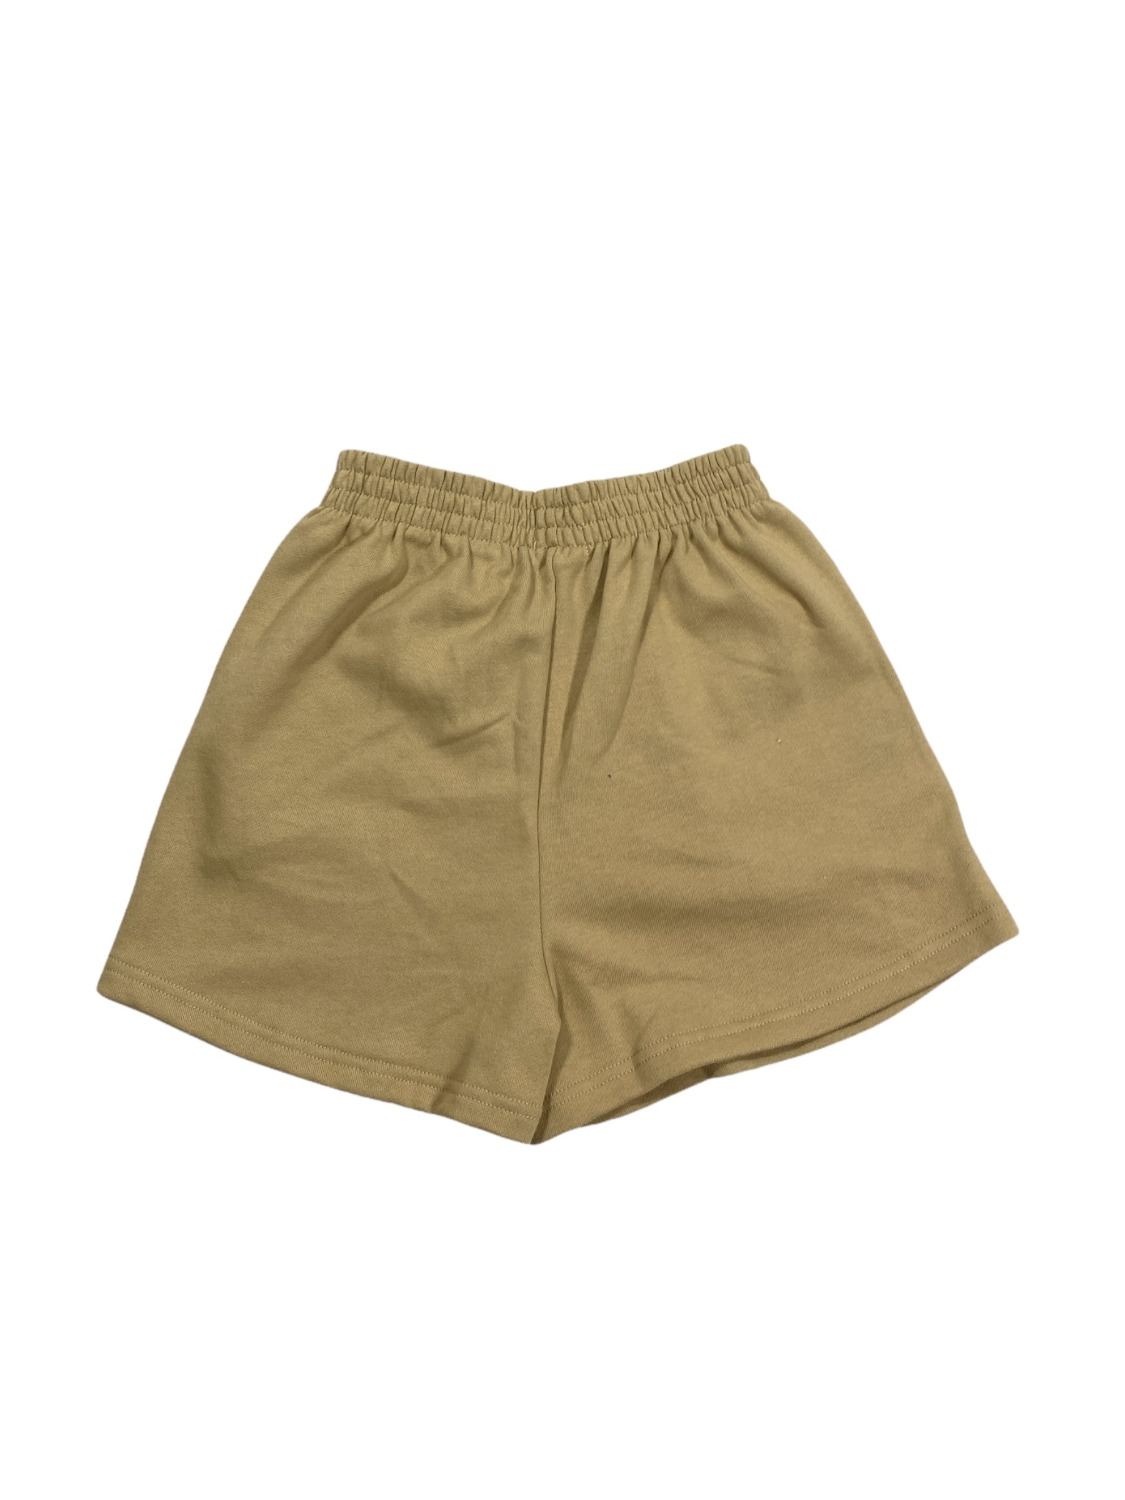 BLURRR Fluffy Shorts (Beige)